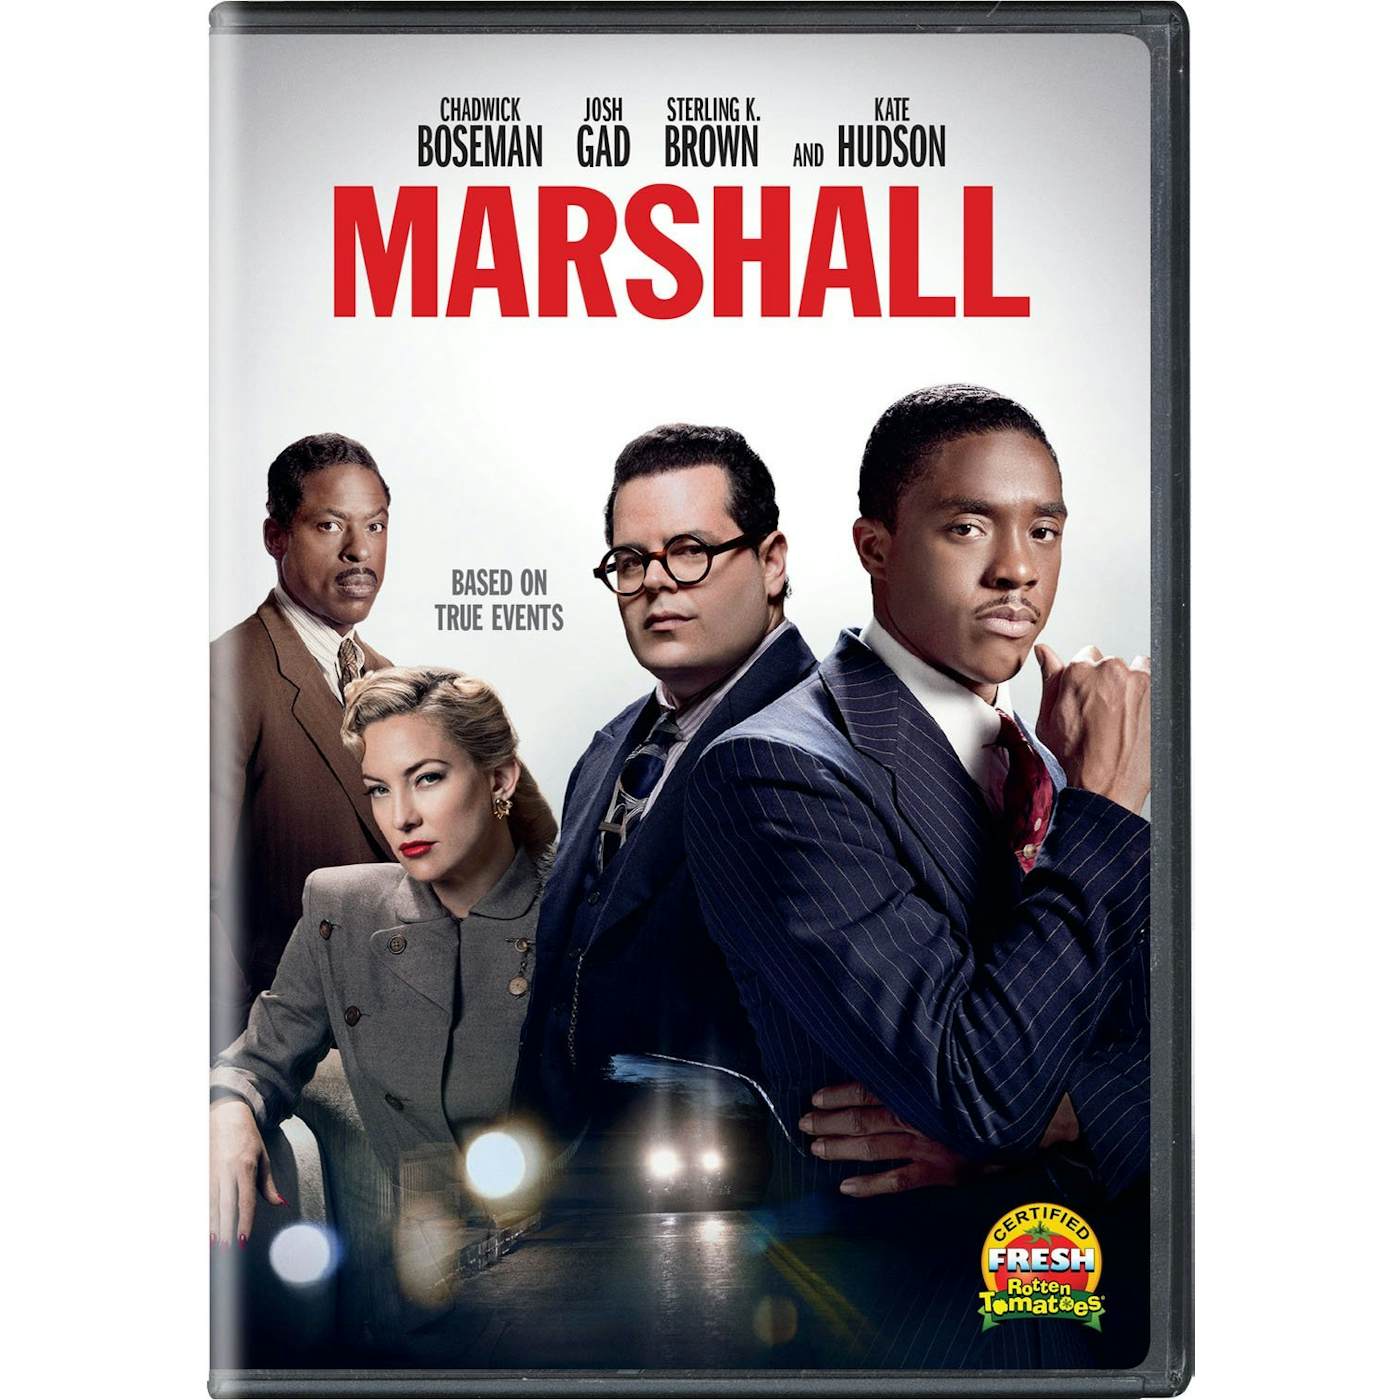 MARSHALL DVD